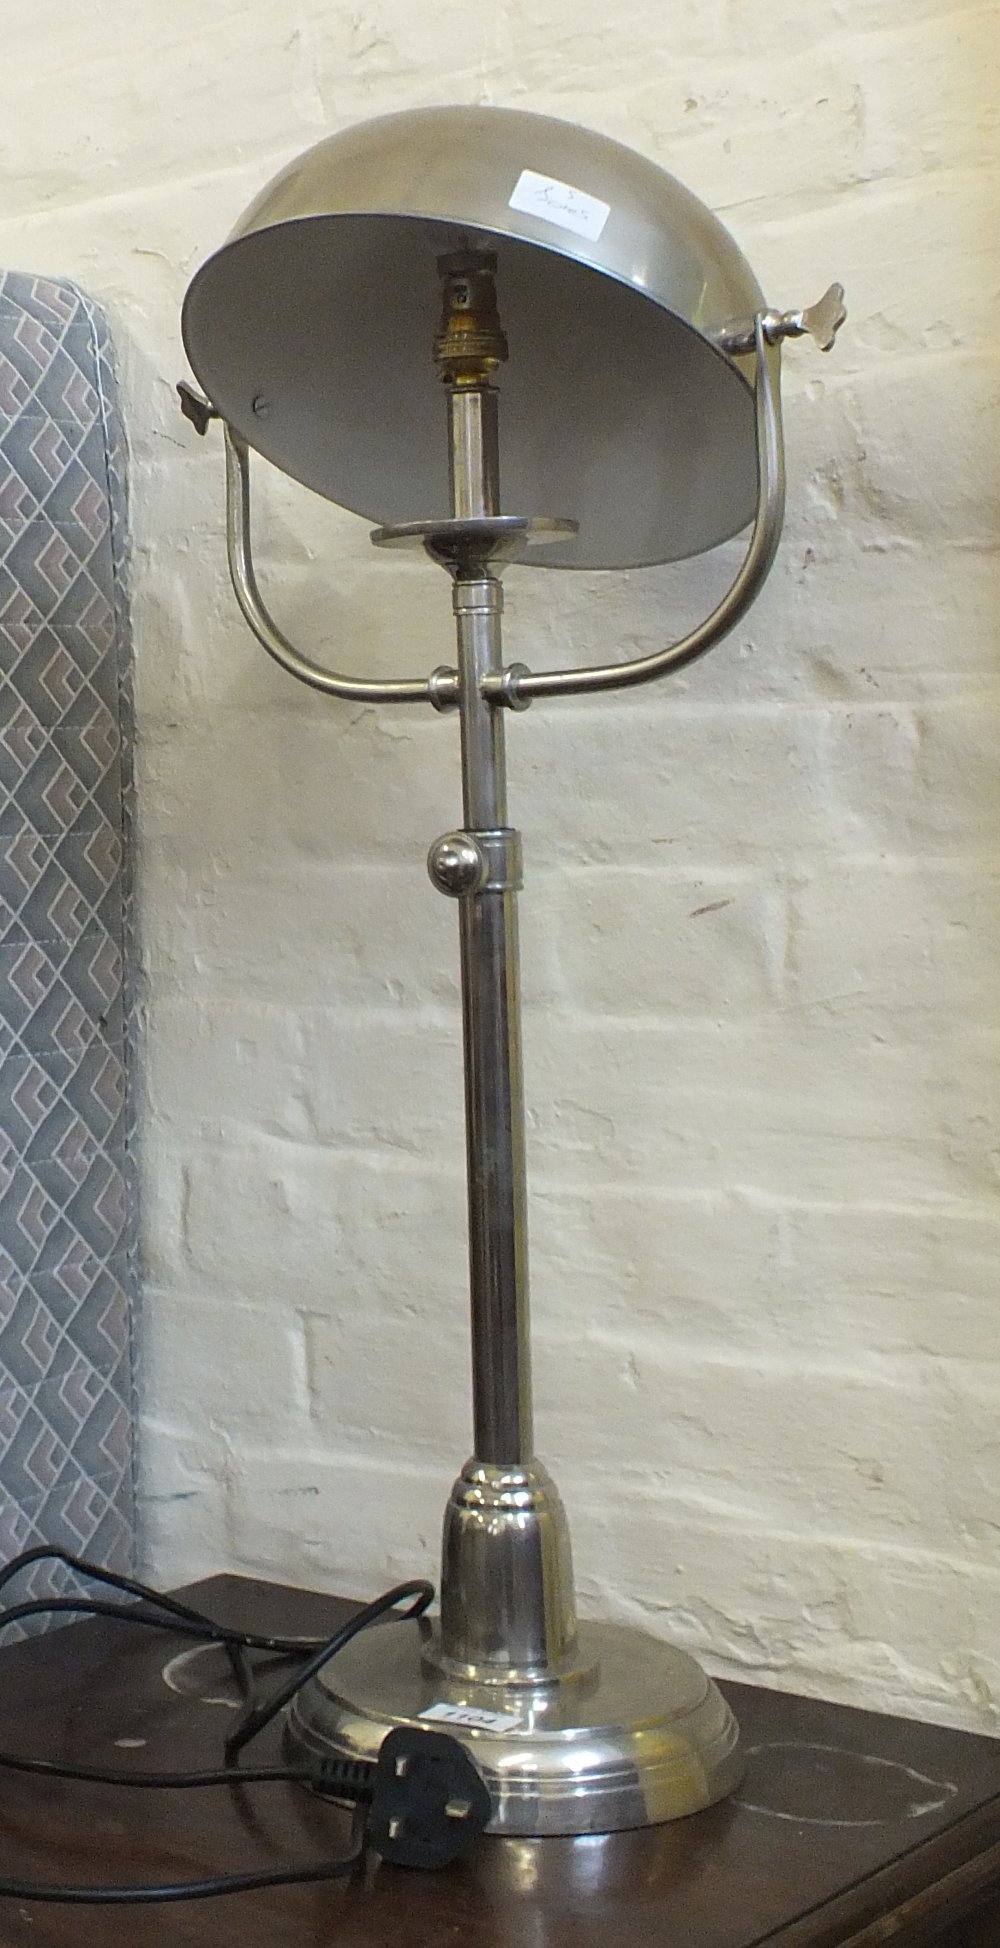 An chrome adjustable student's lamp